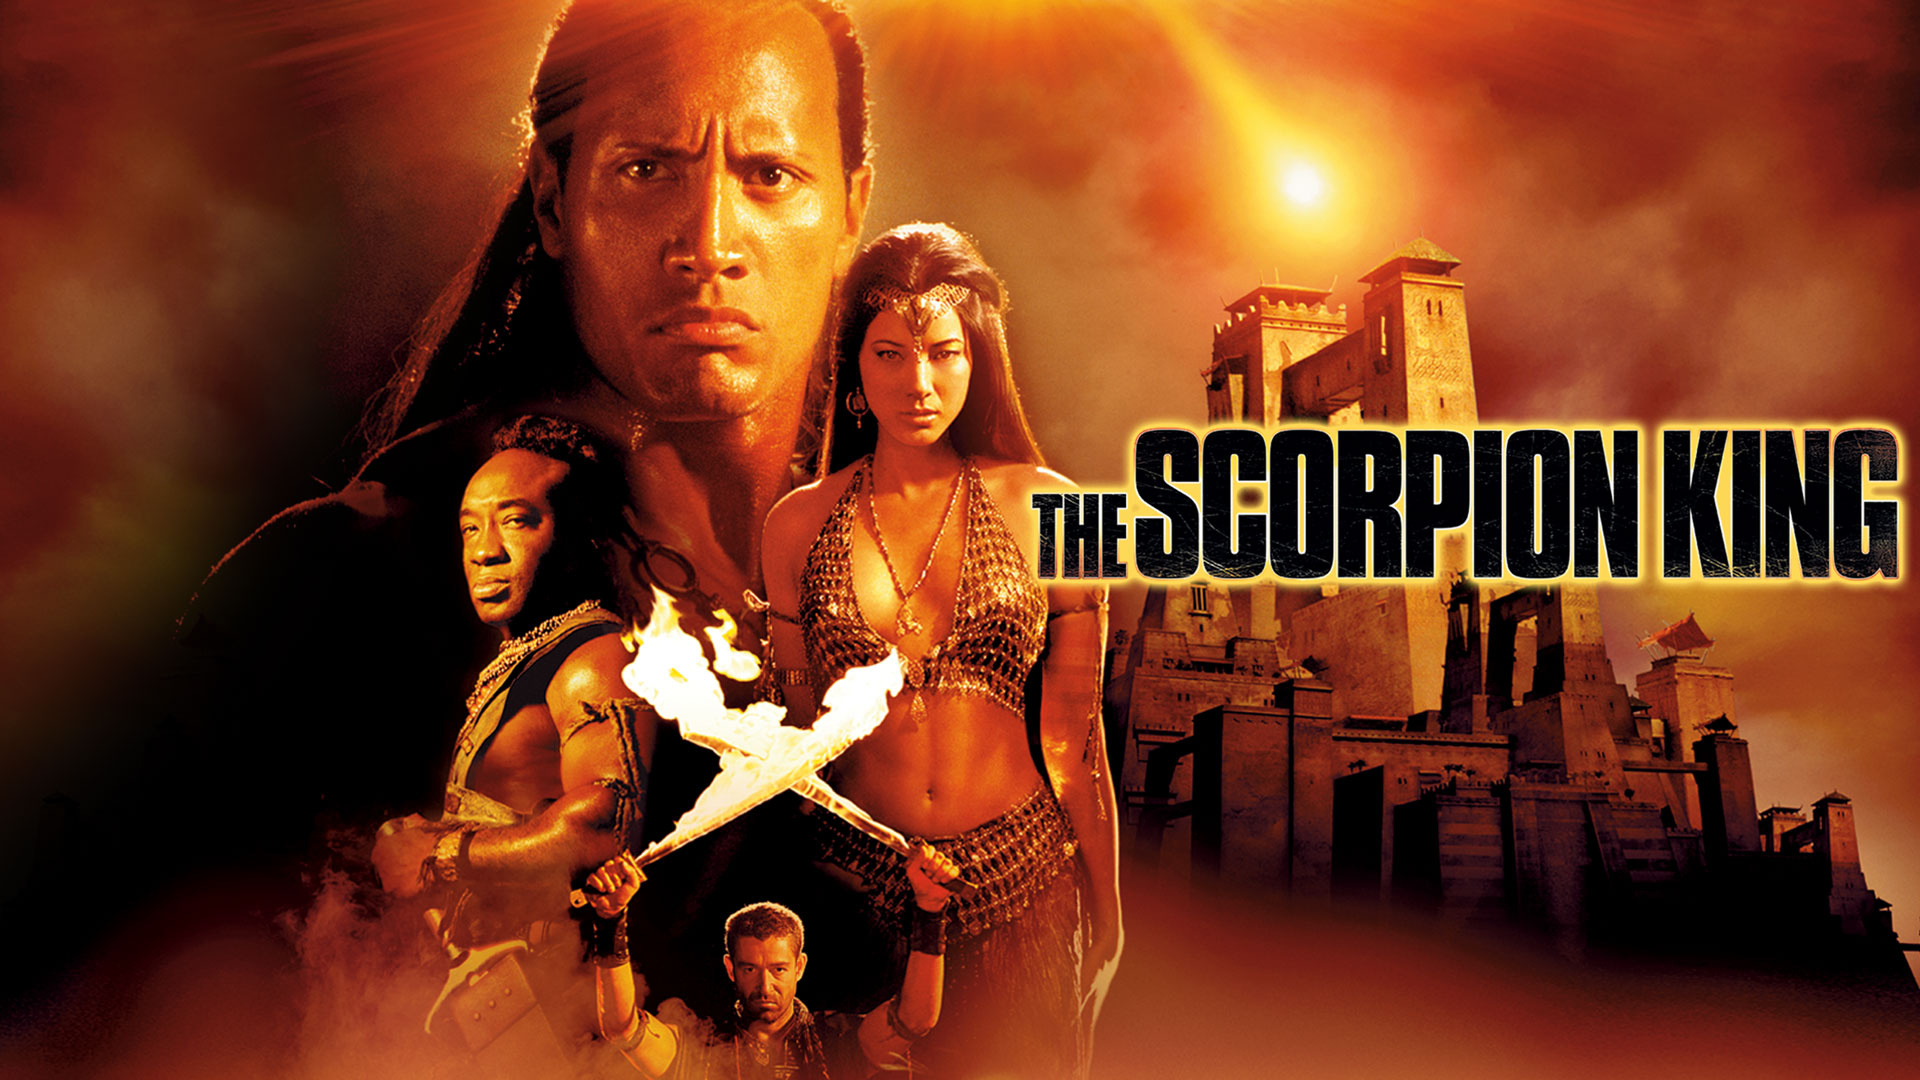 Michael Clarke Duncan, The Scorpion King movie, Epic adventure, Action film, 1920x1080 Full HD Desktop